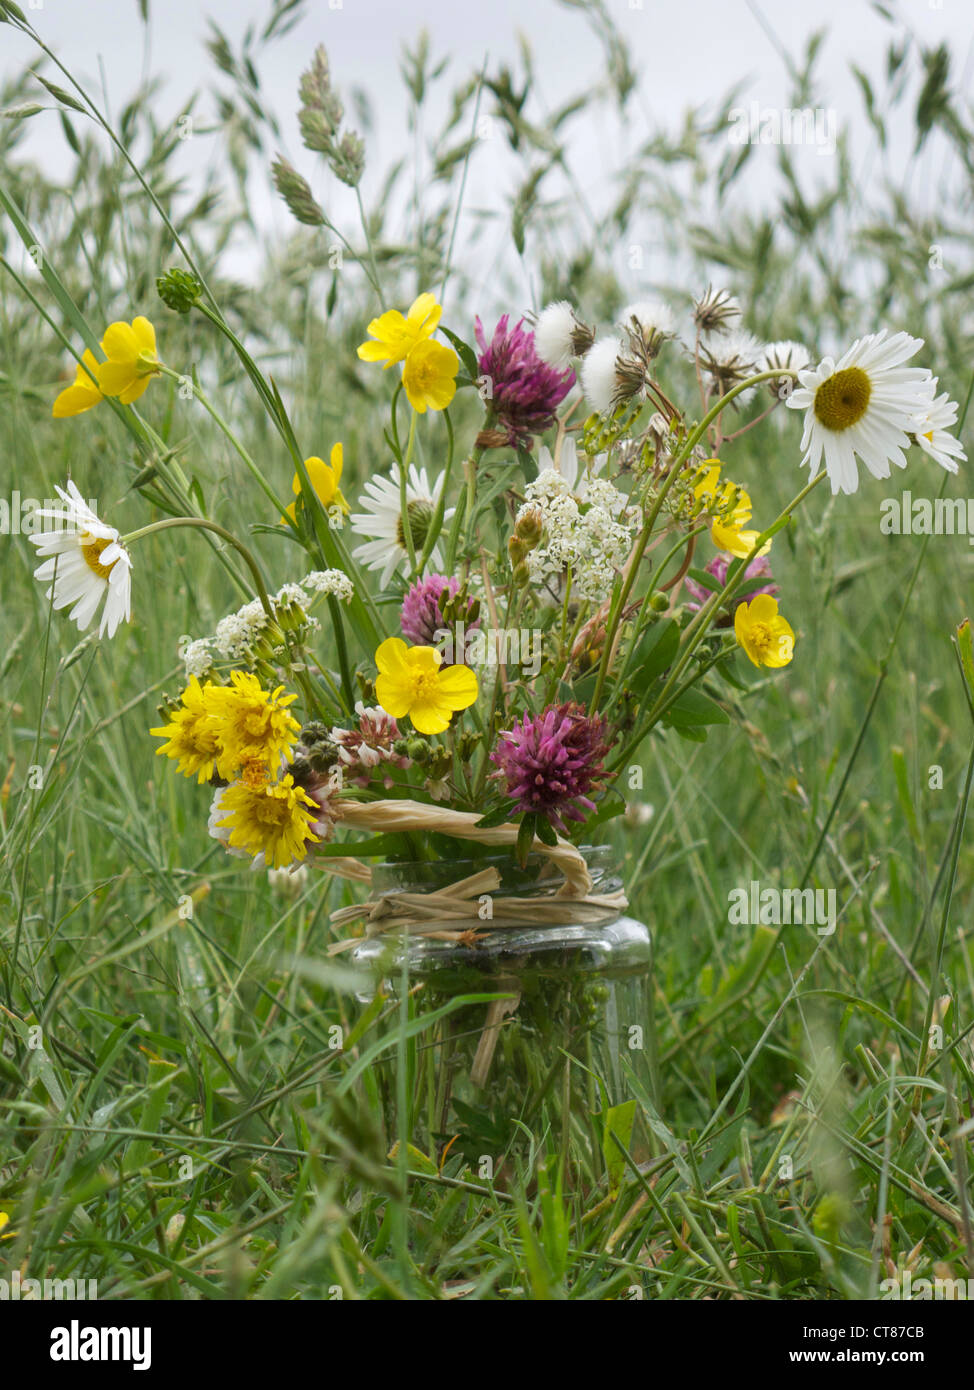 Jam jar of wild flowers on grass in farmland Stock Photo